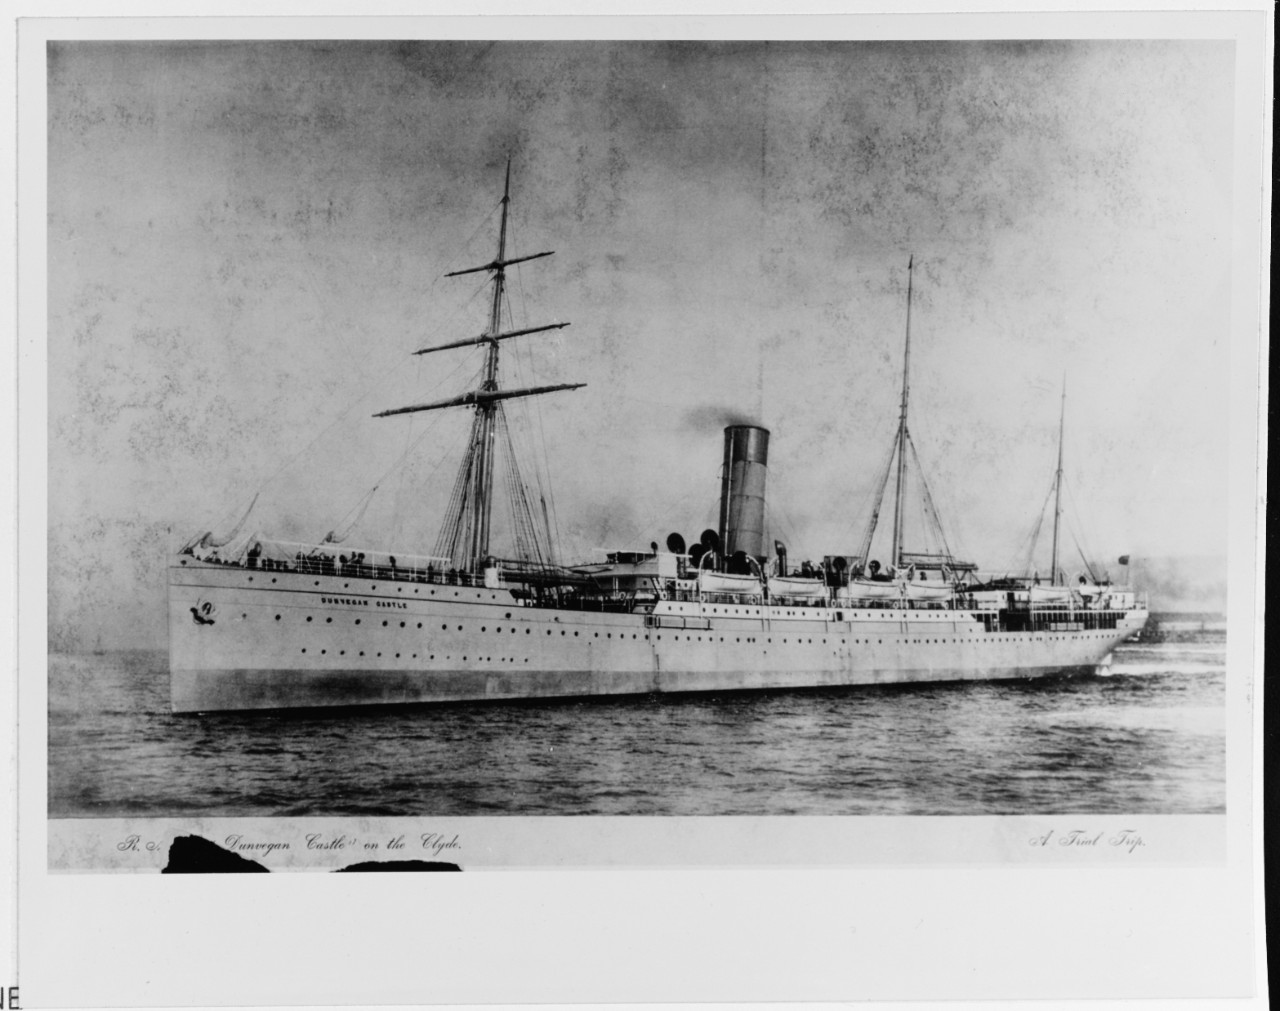 DUNVEGAN CASTLE (British merchant ship, circa 1890)